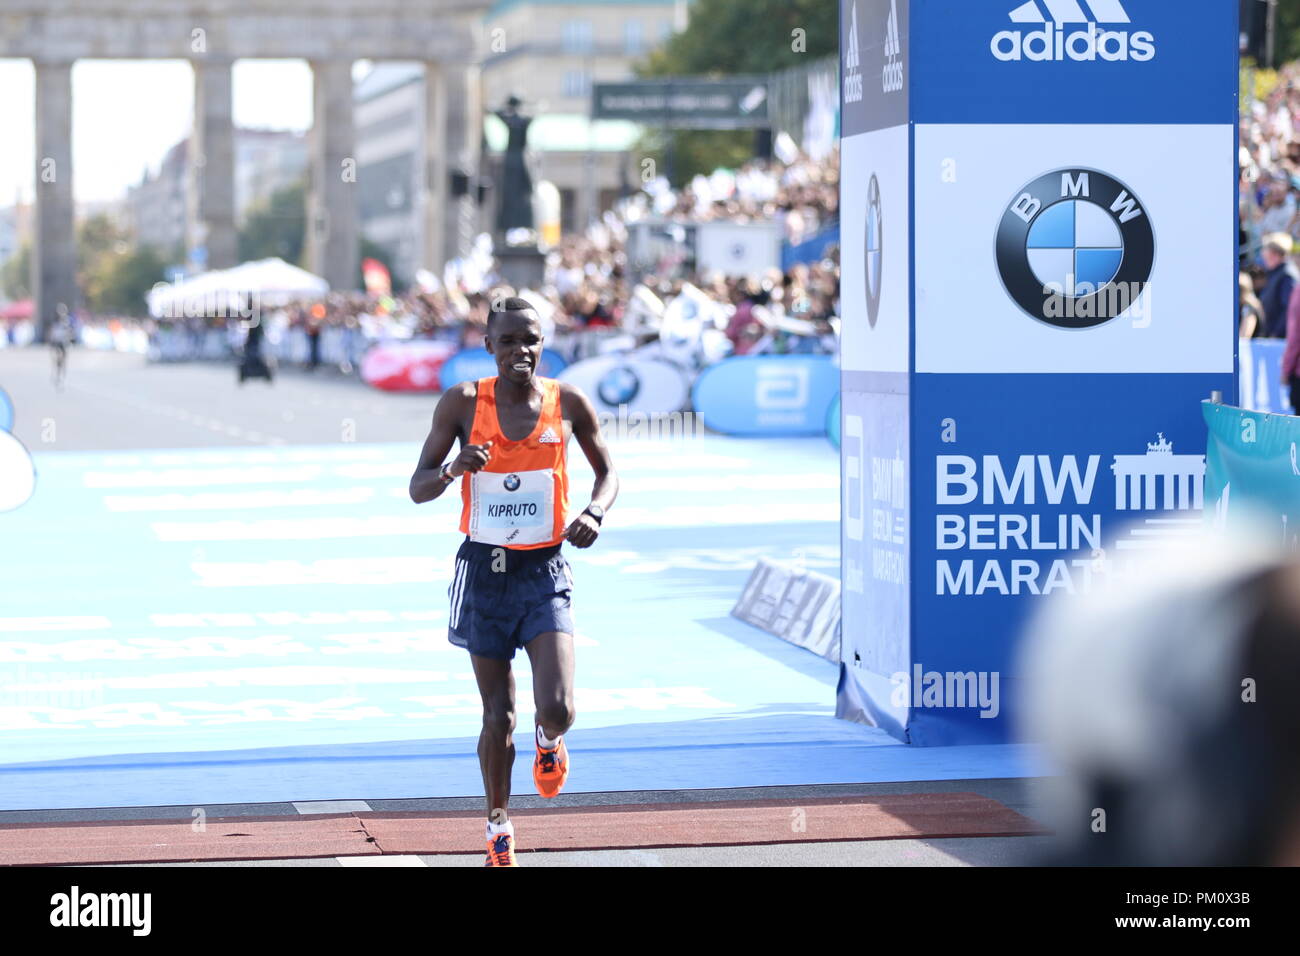 Image result for amos kipruto in berlin marathon